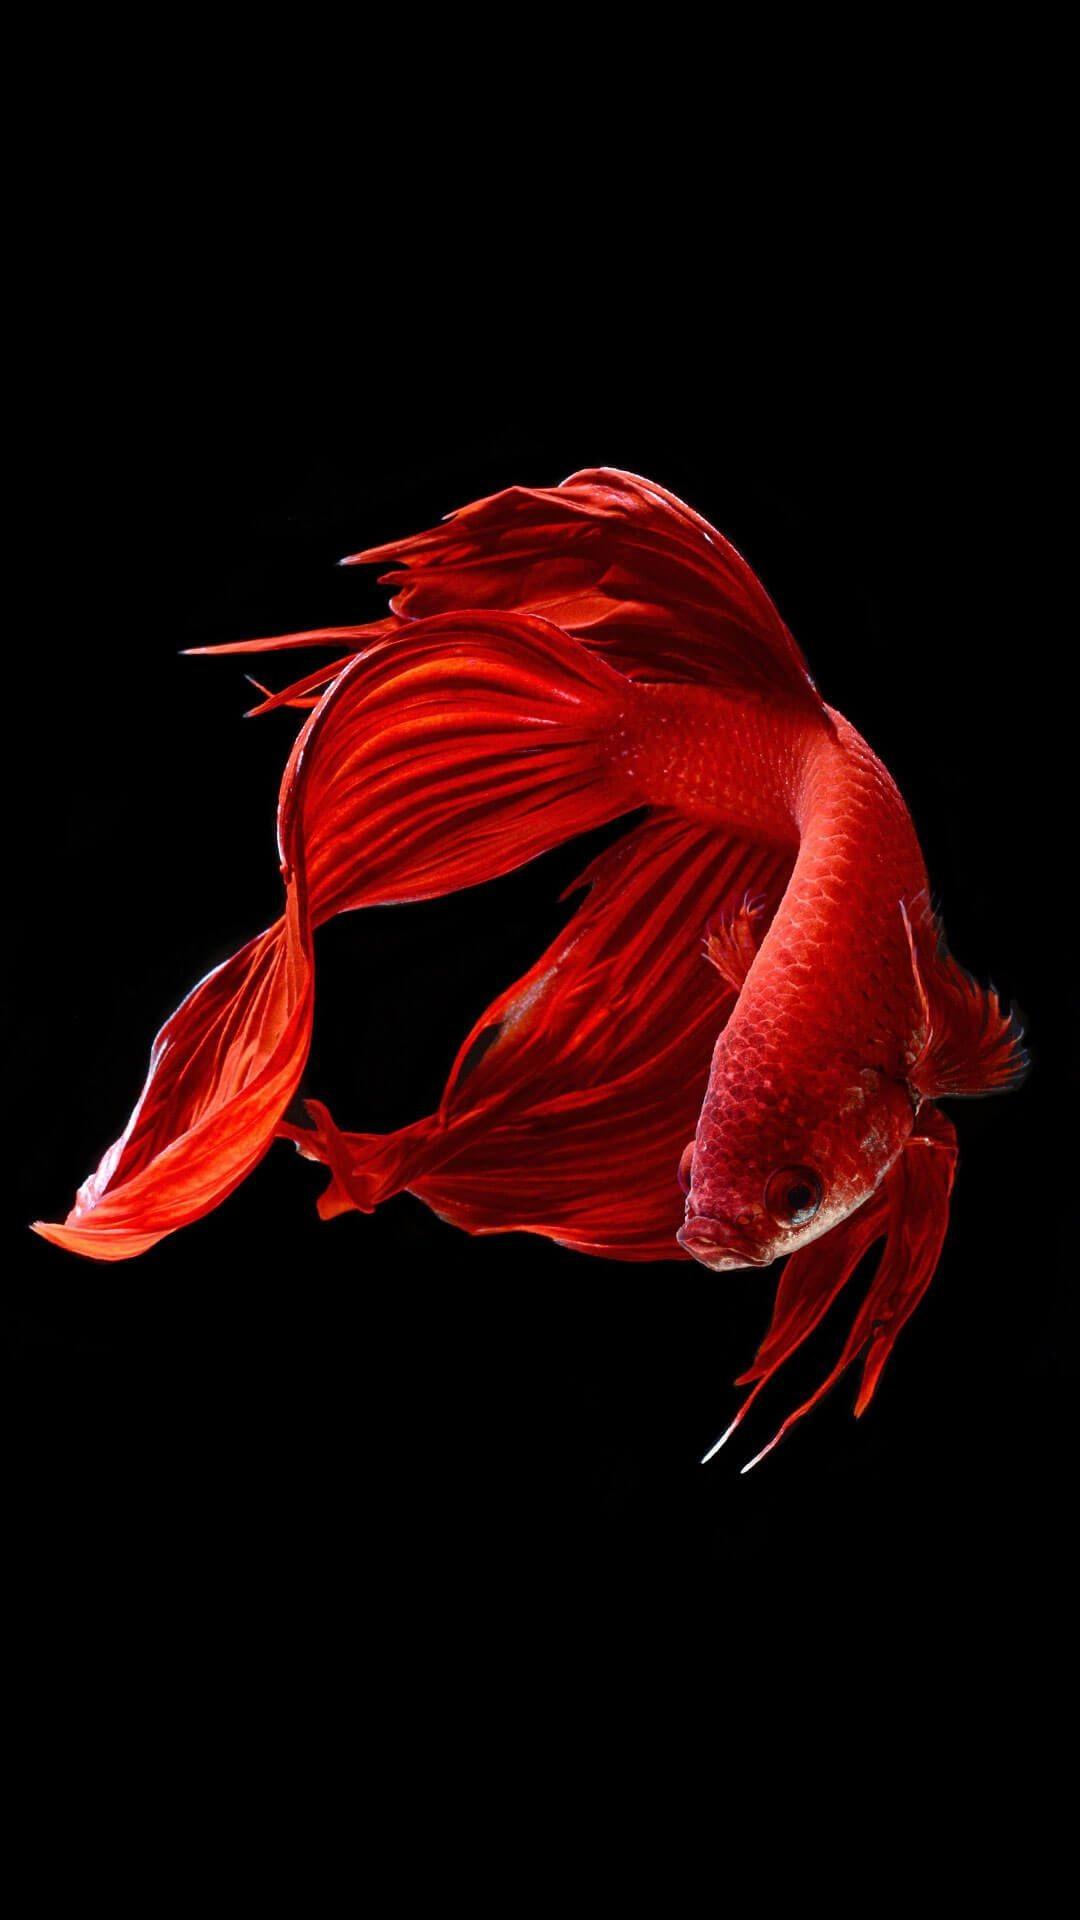 Red Fish Wallpaper